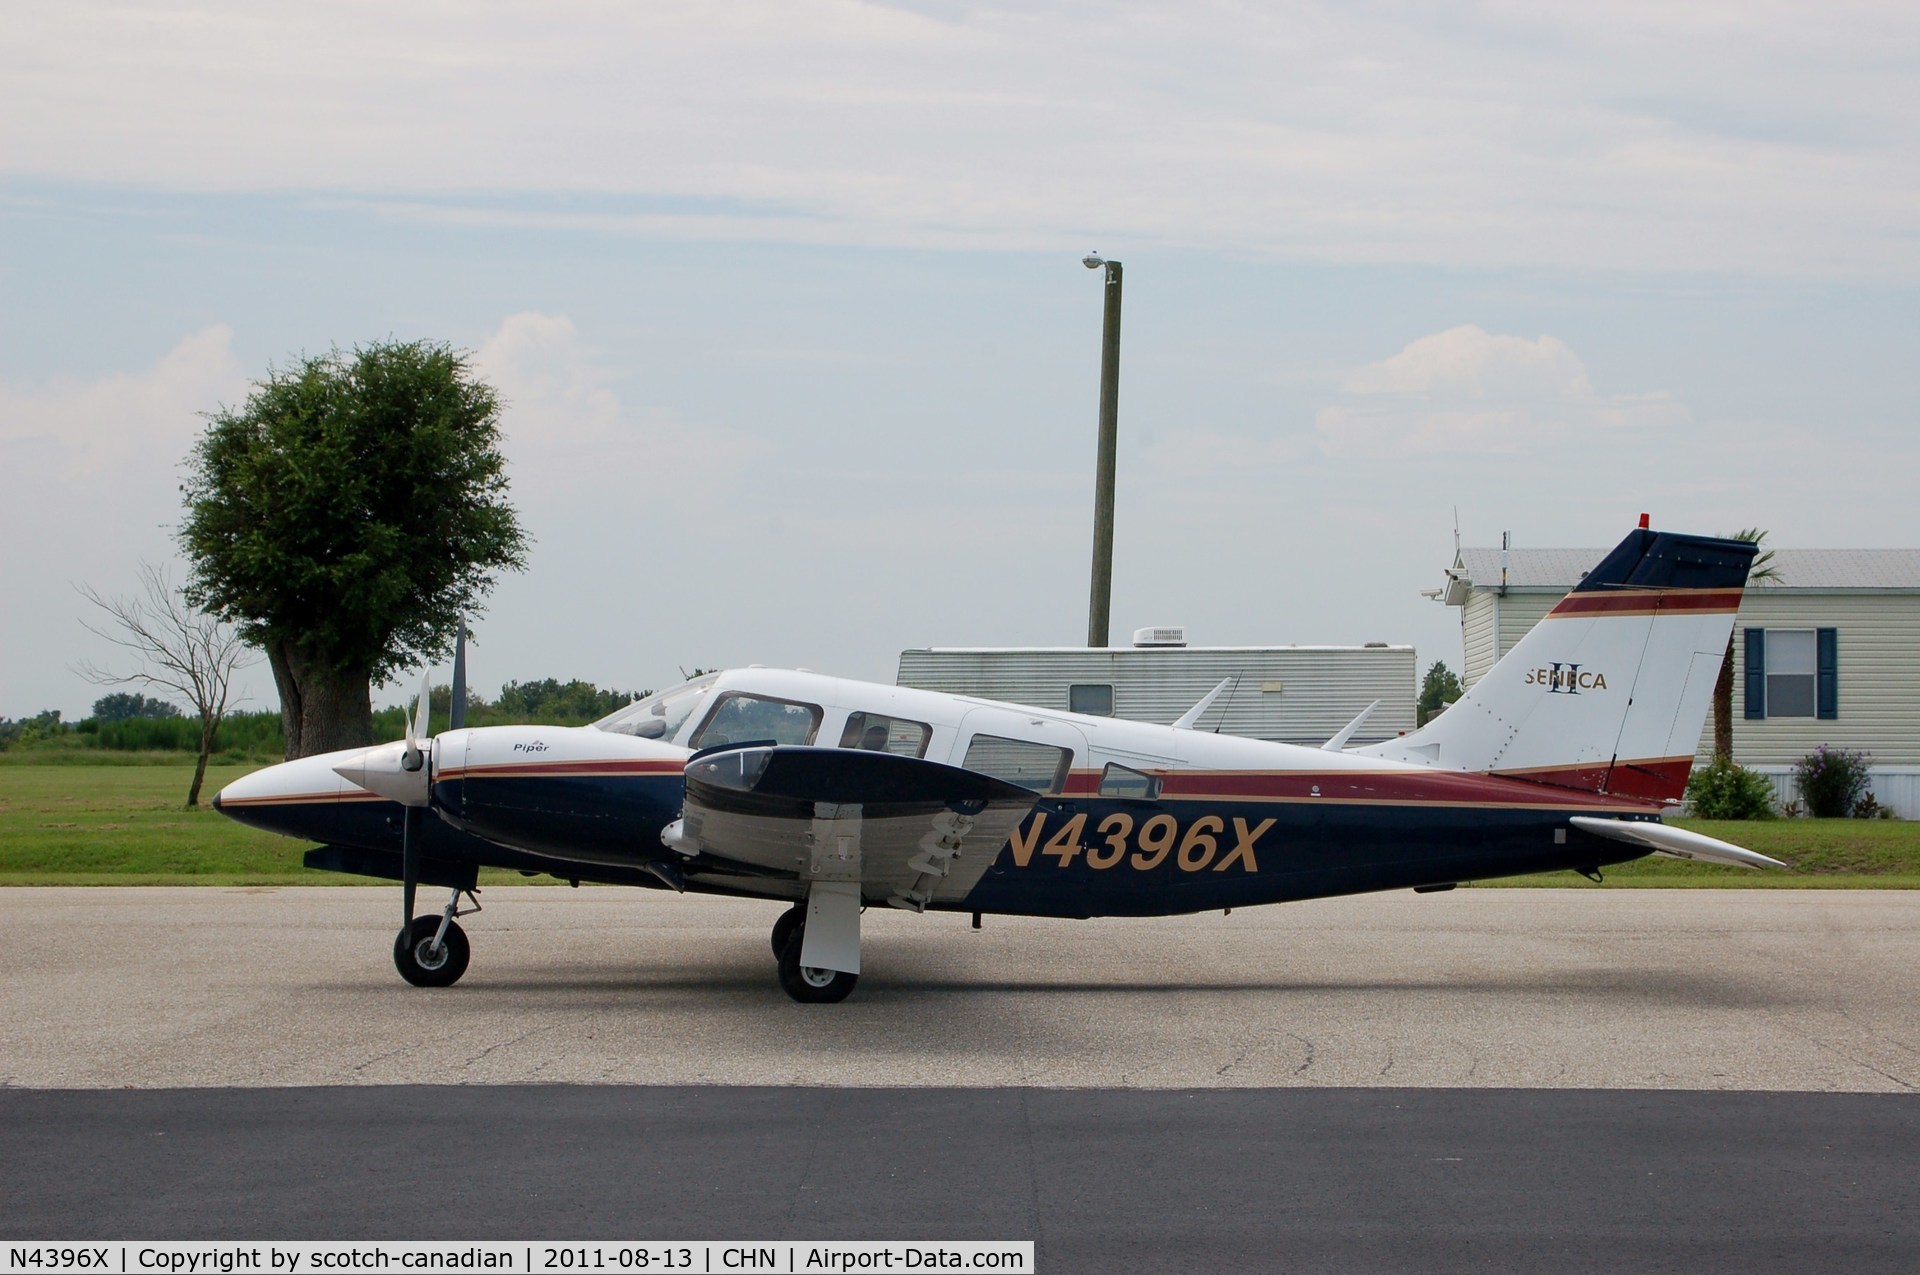 N4396X, 1975 Piper PA-34-200T C/N 34-7670038, 1975 Piper PA-34-200T N4396X  at Wauchula Municipal Airport, Wauchula, FL